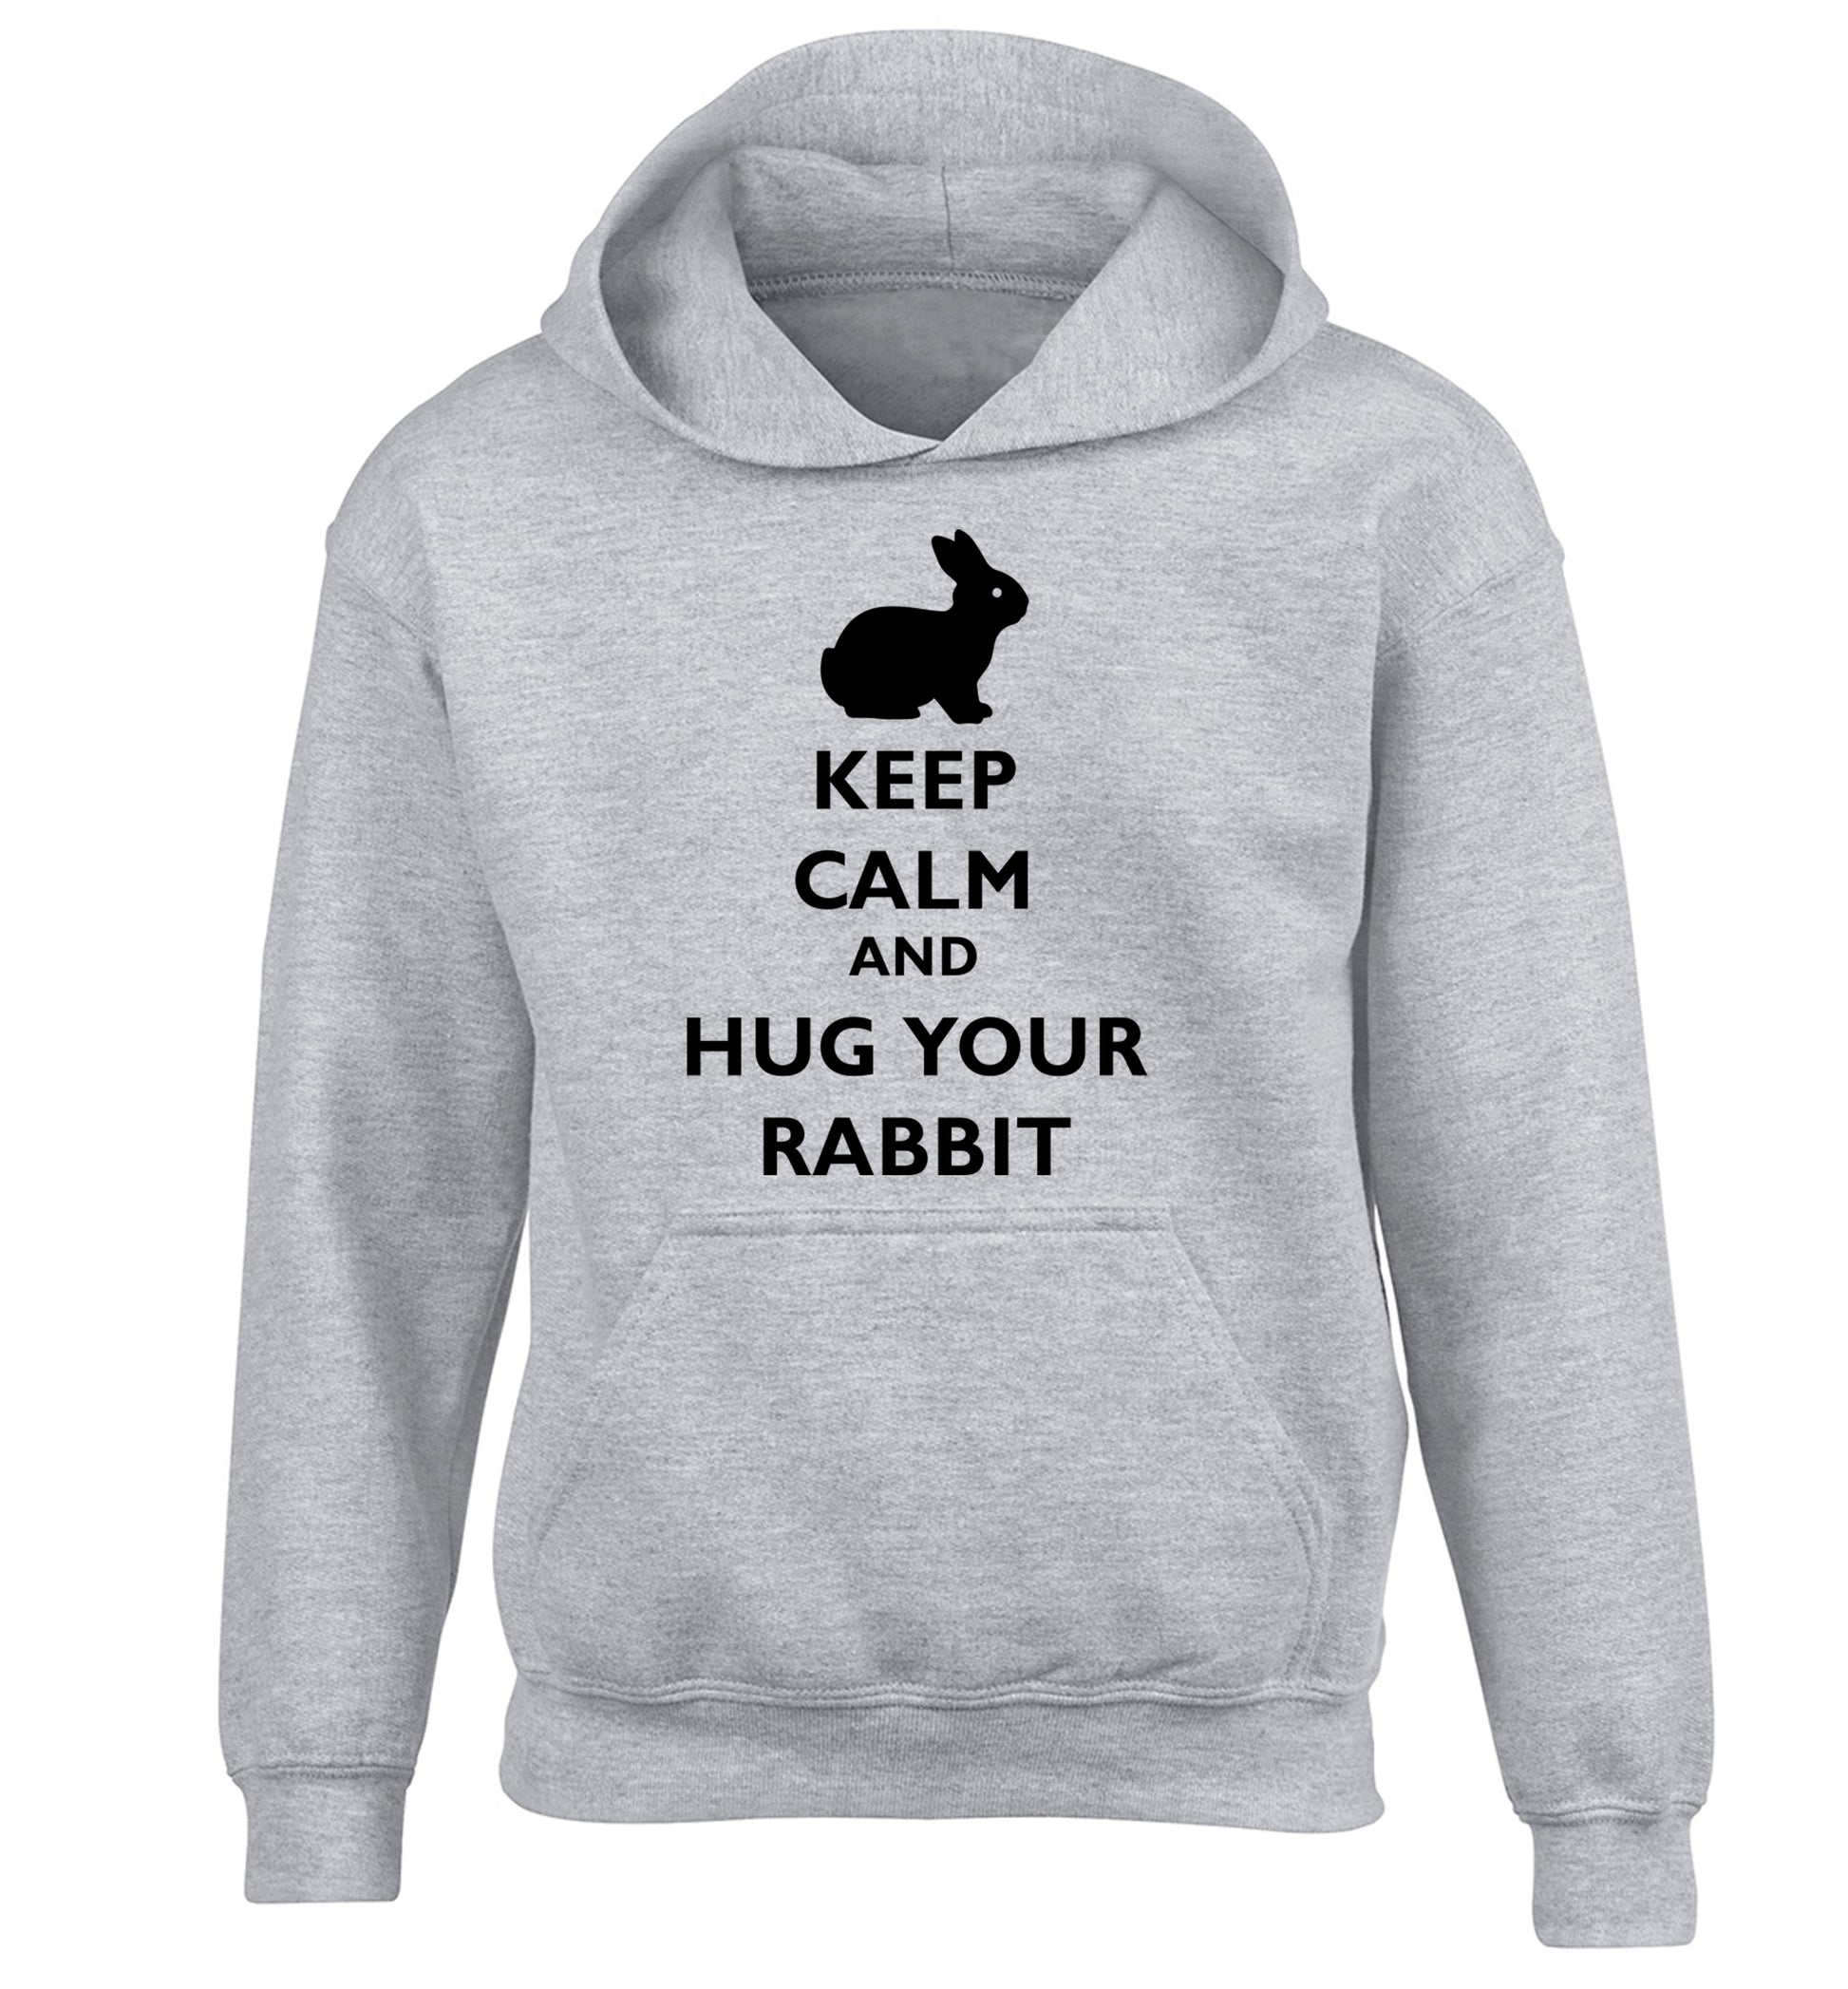 Keep calm and hug your rabbit children's grey hoodie 12-13 Years